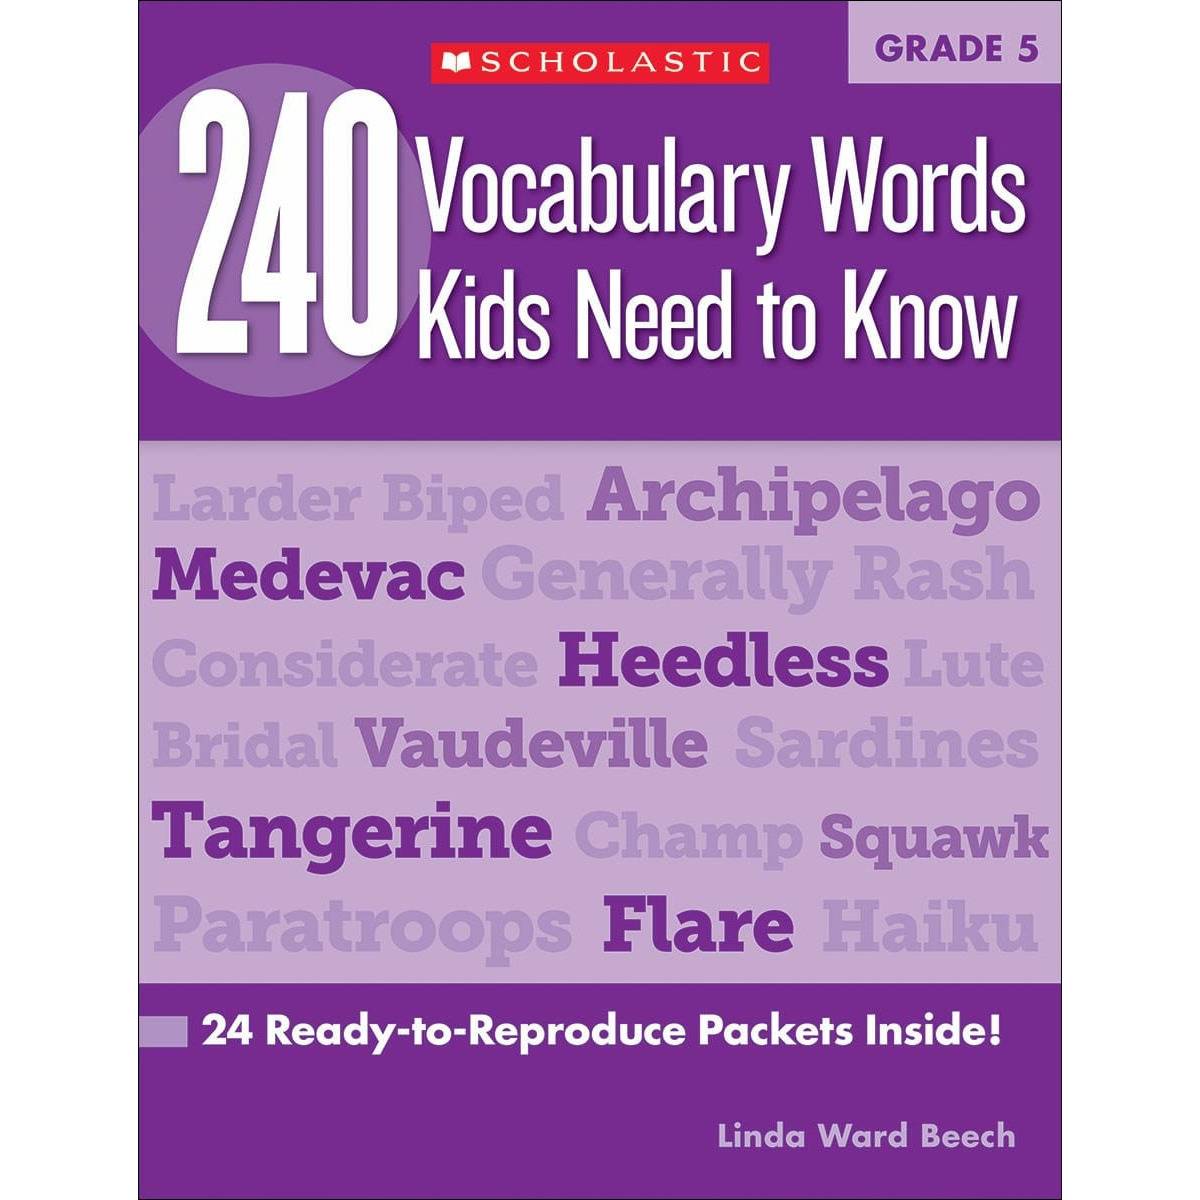 240 Vocabulary Words Kids Need to Know: Grade 5 - MakoStars Online Store